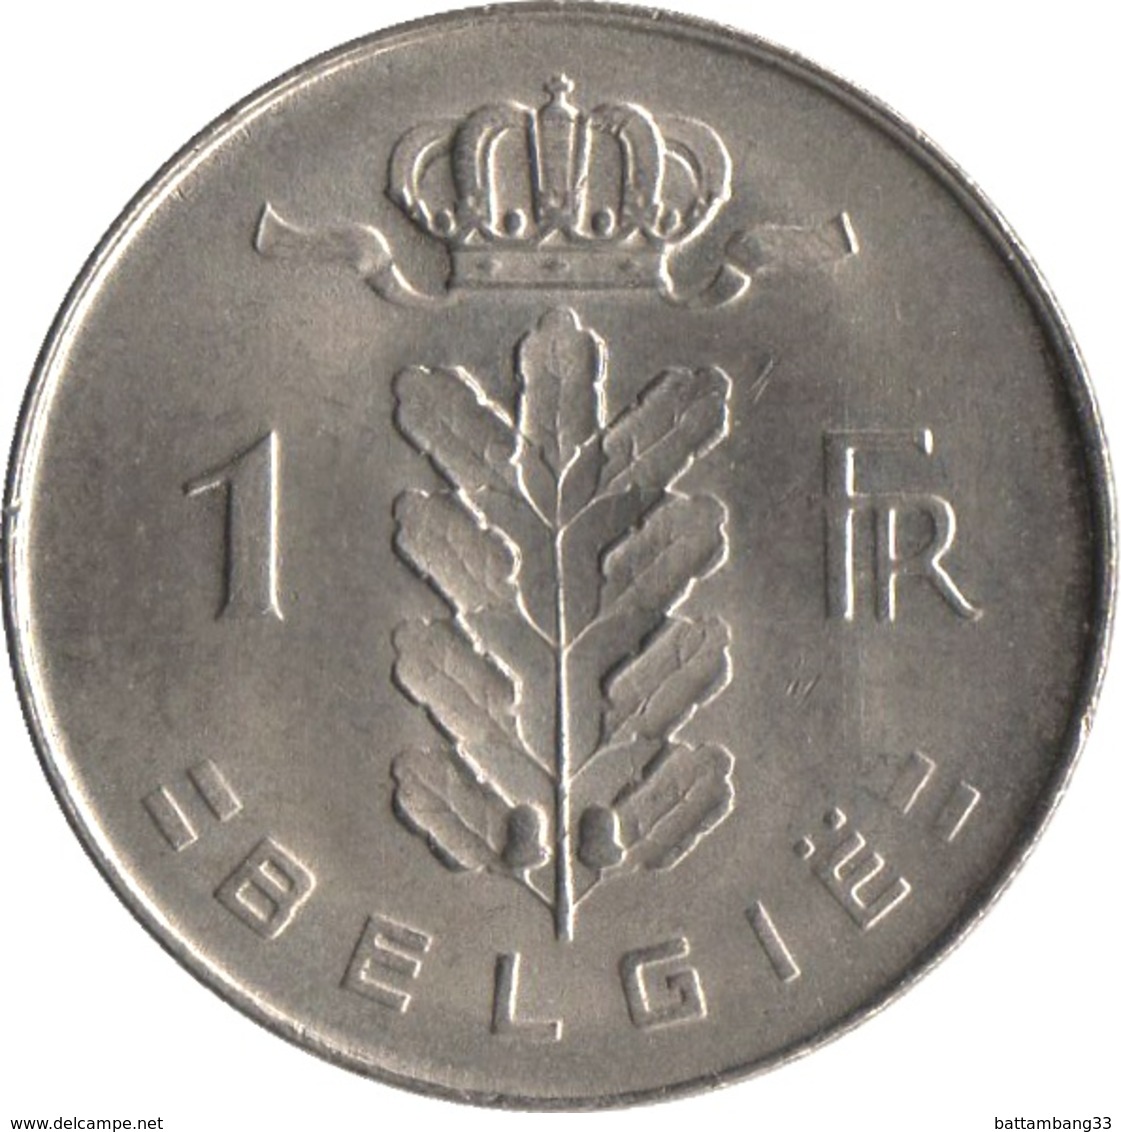 1 FRANC BELGE - 1 Franc